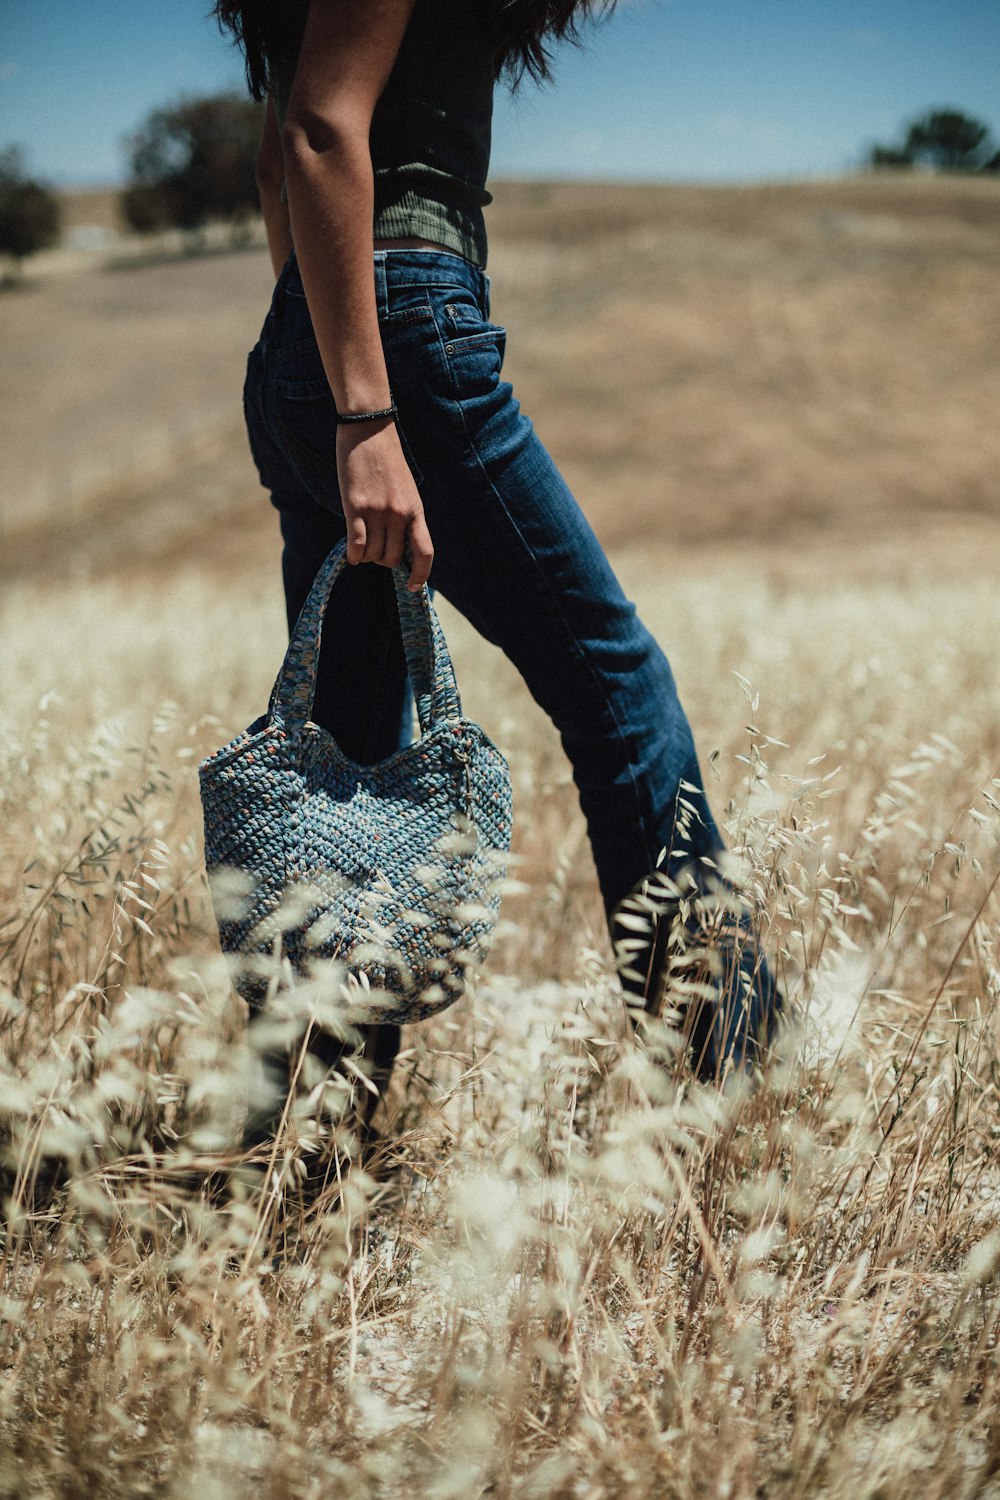 a woman walking through a field carrying a purse